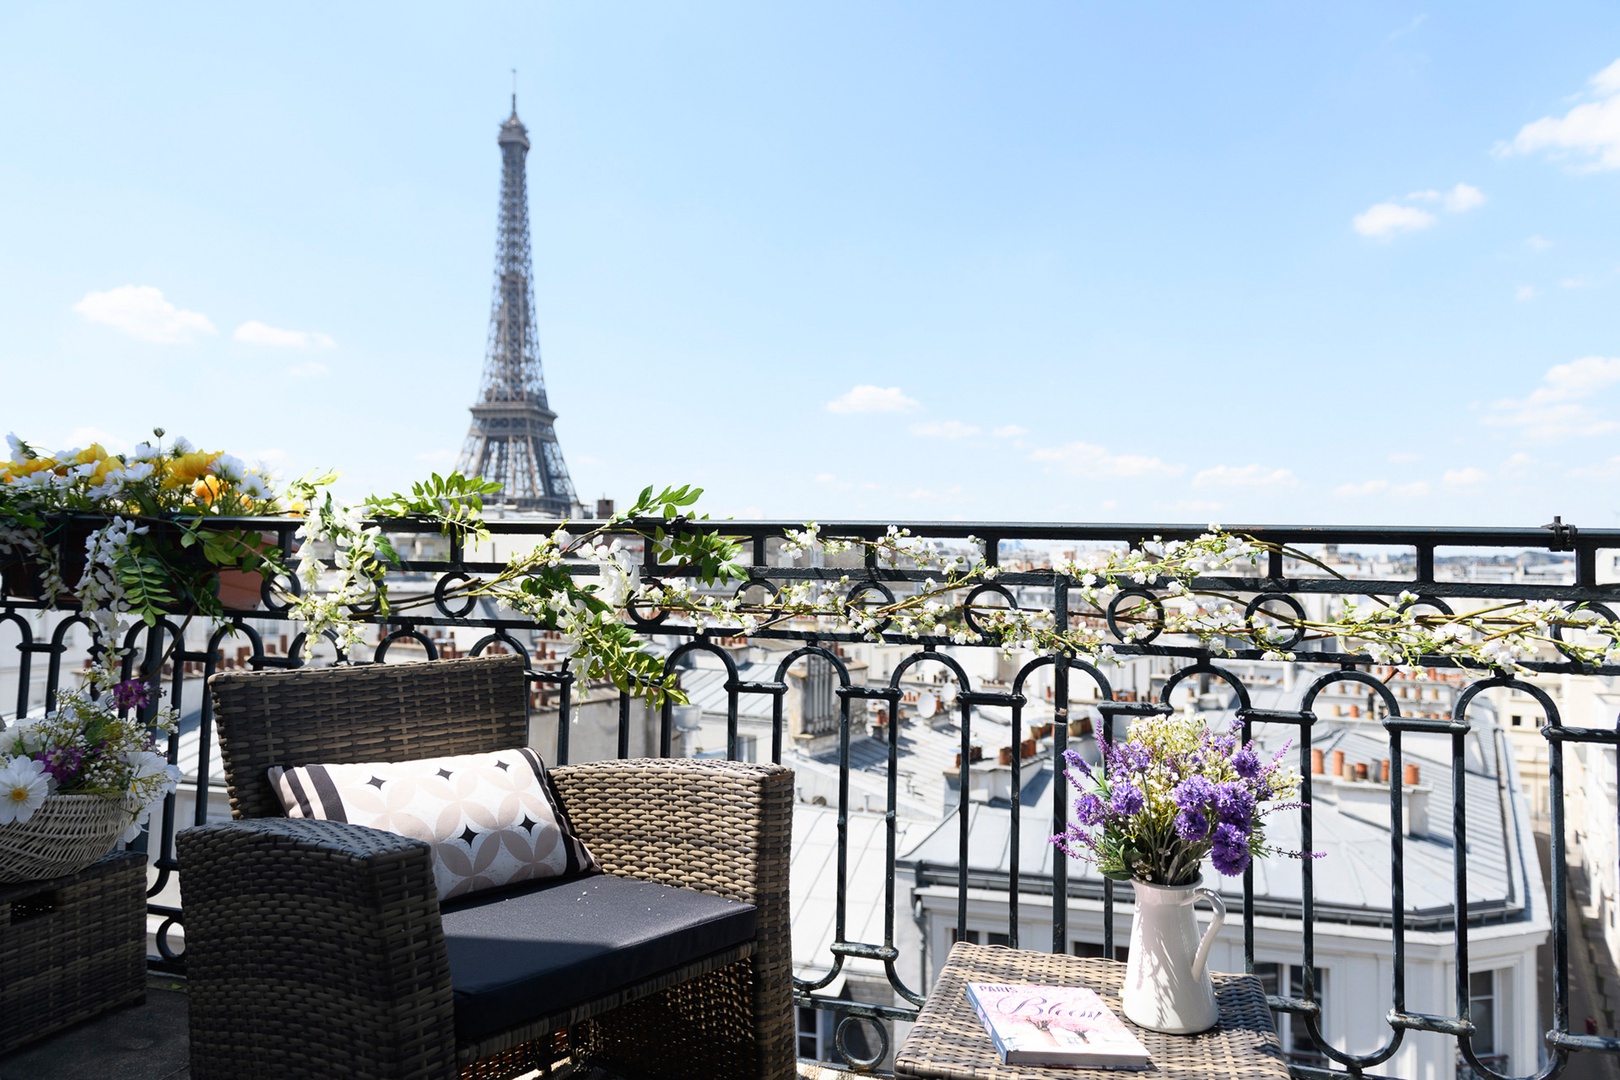 Enjoy unforgettable Eiffel Tower views while dining al fresco.